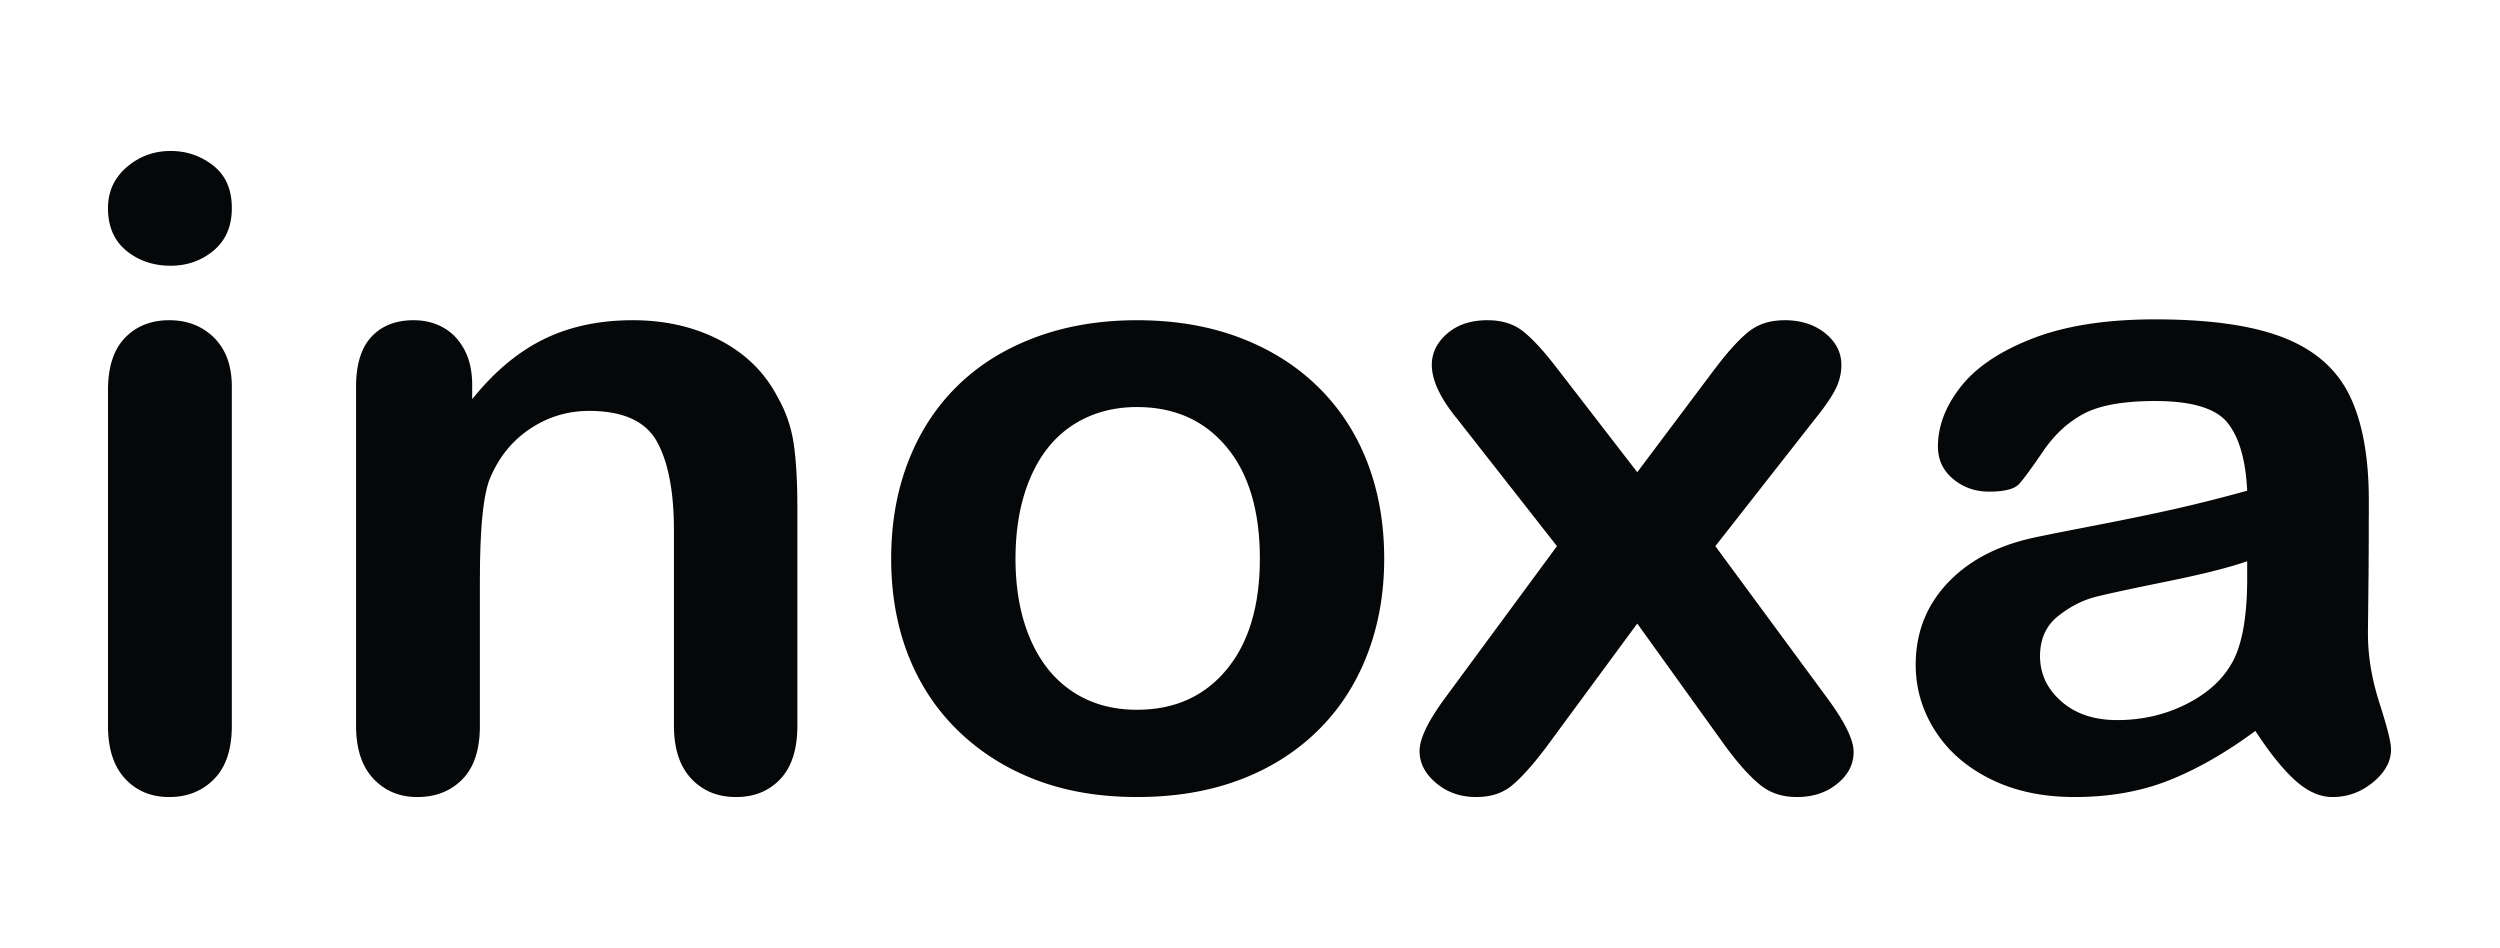 Inoxa logo black